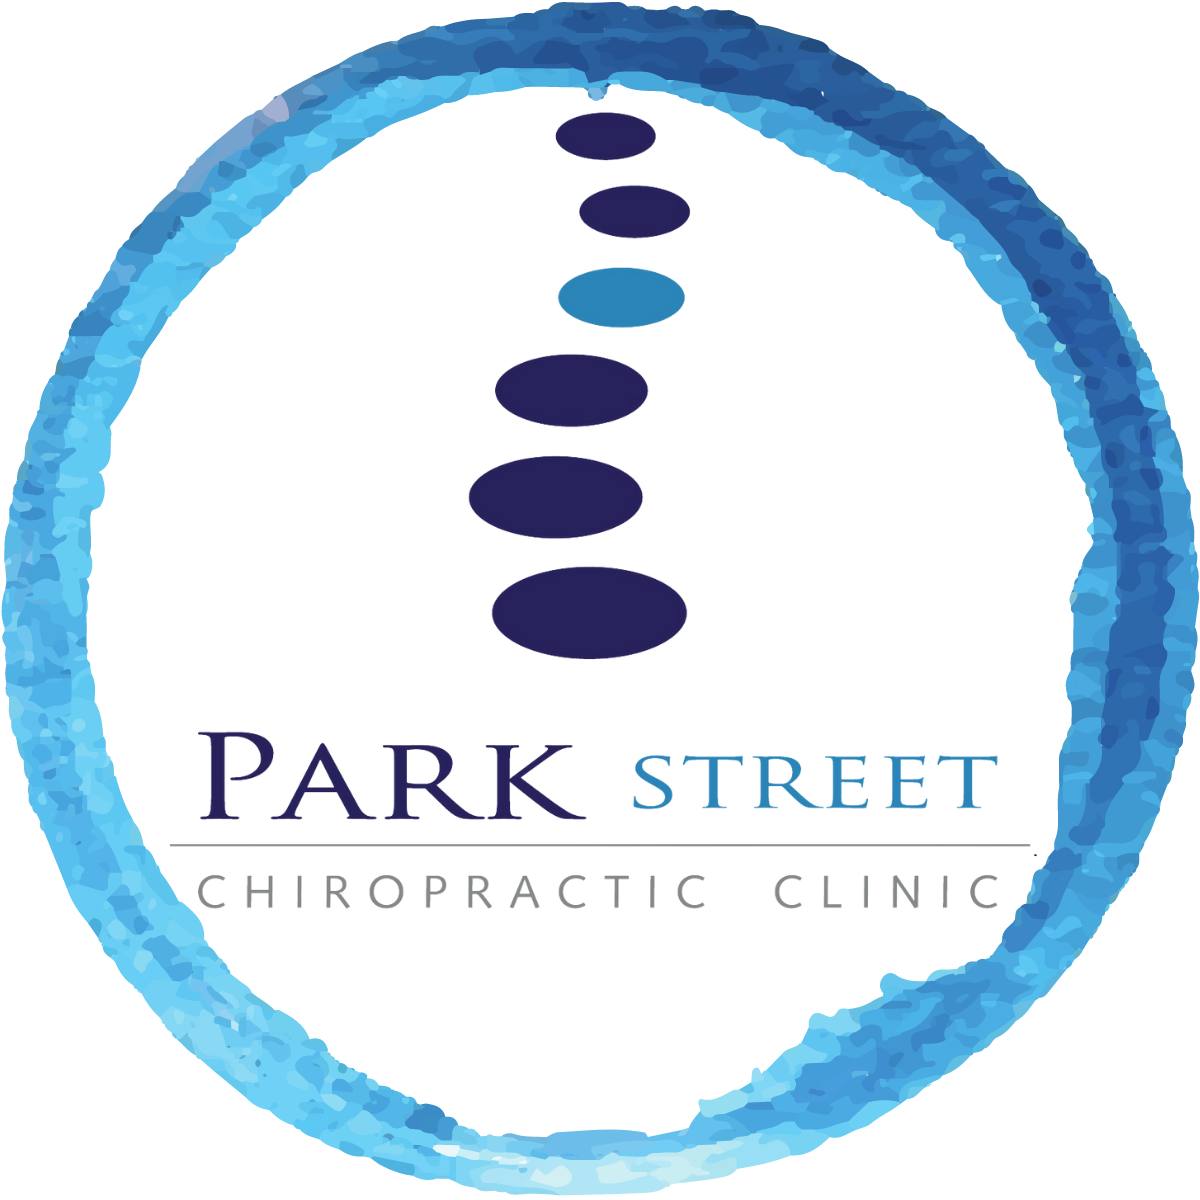 Park Street Chiropractic Clinic's logo